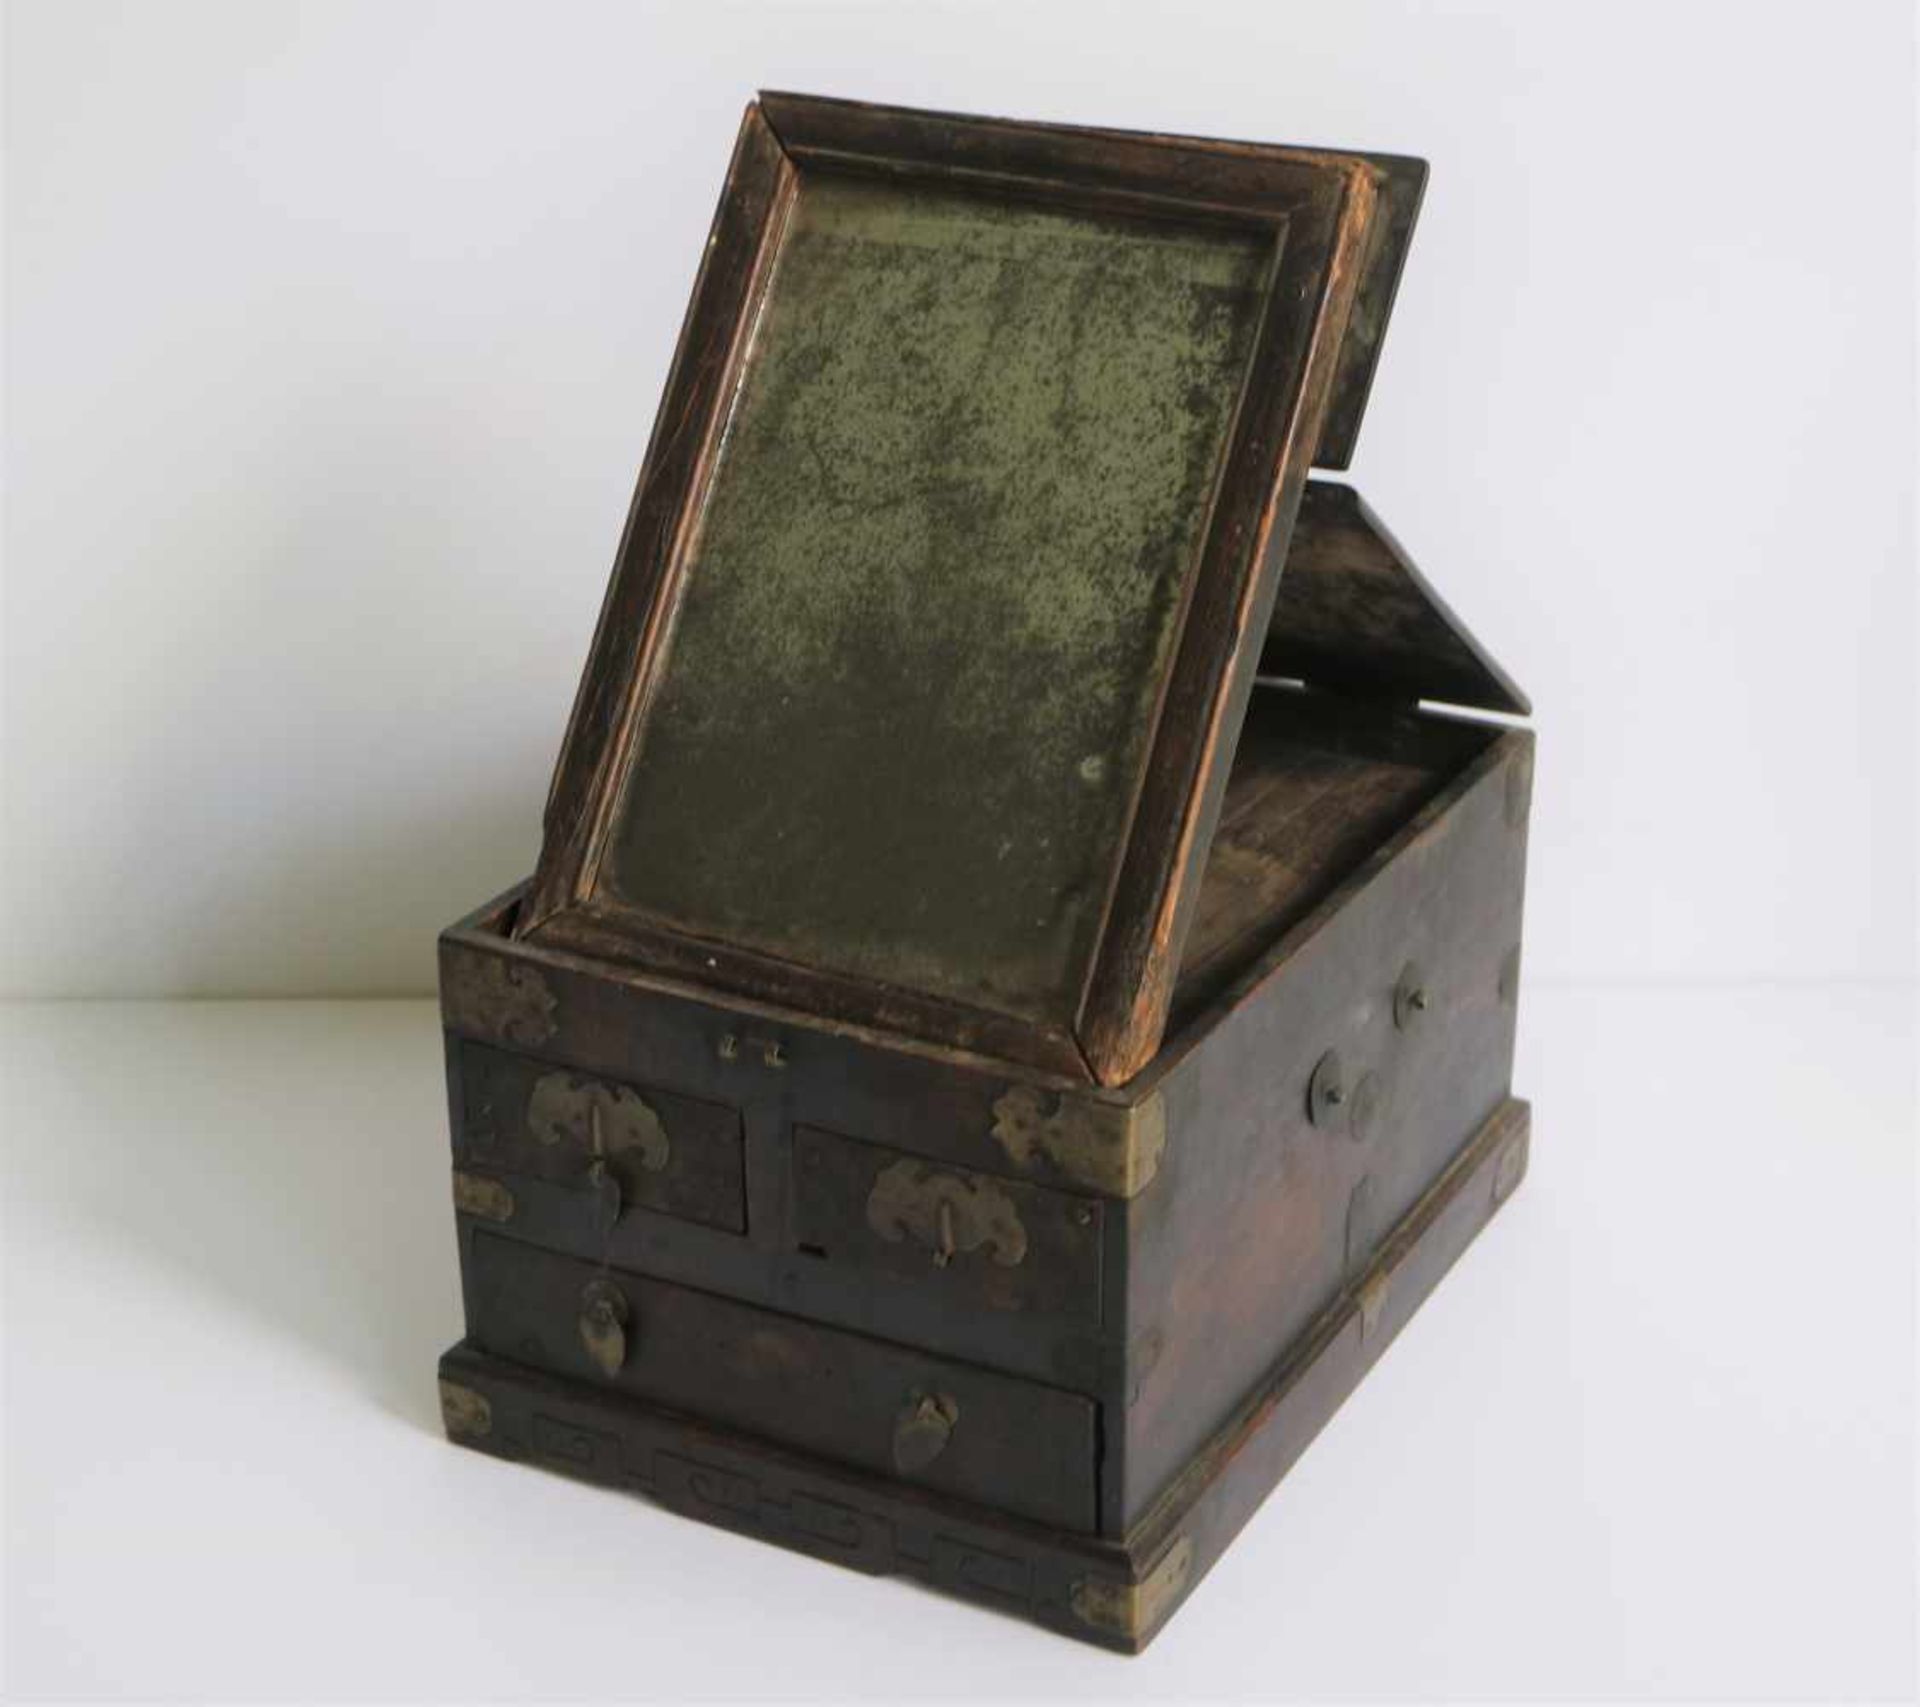 Chinese dress-up box / jewelery box 19th century 28,5 x 22 x 16,5 cm